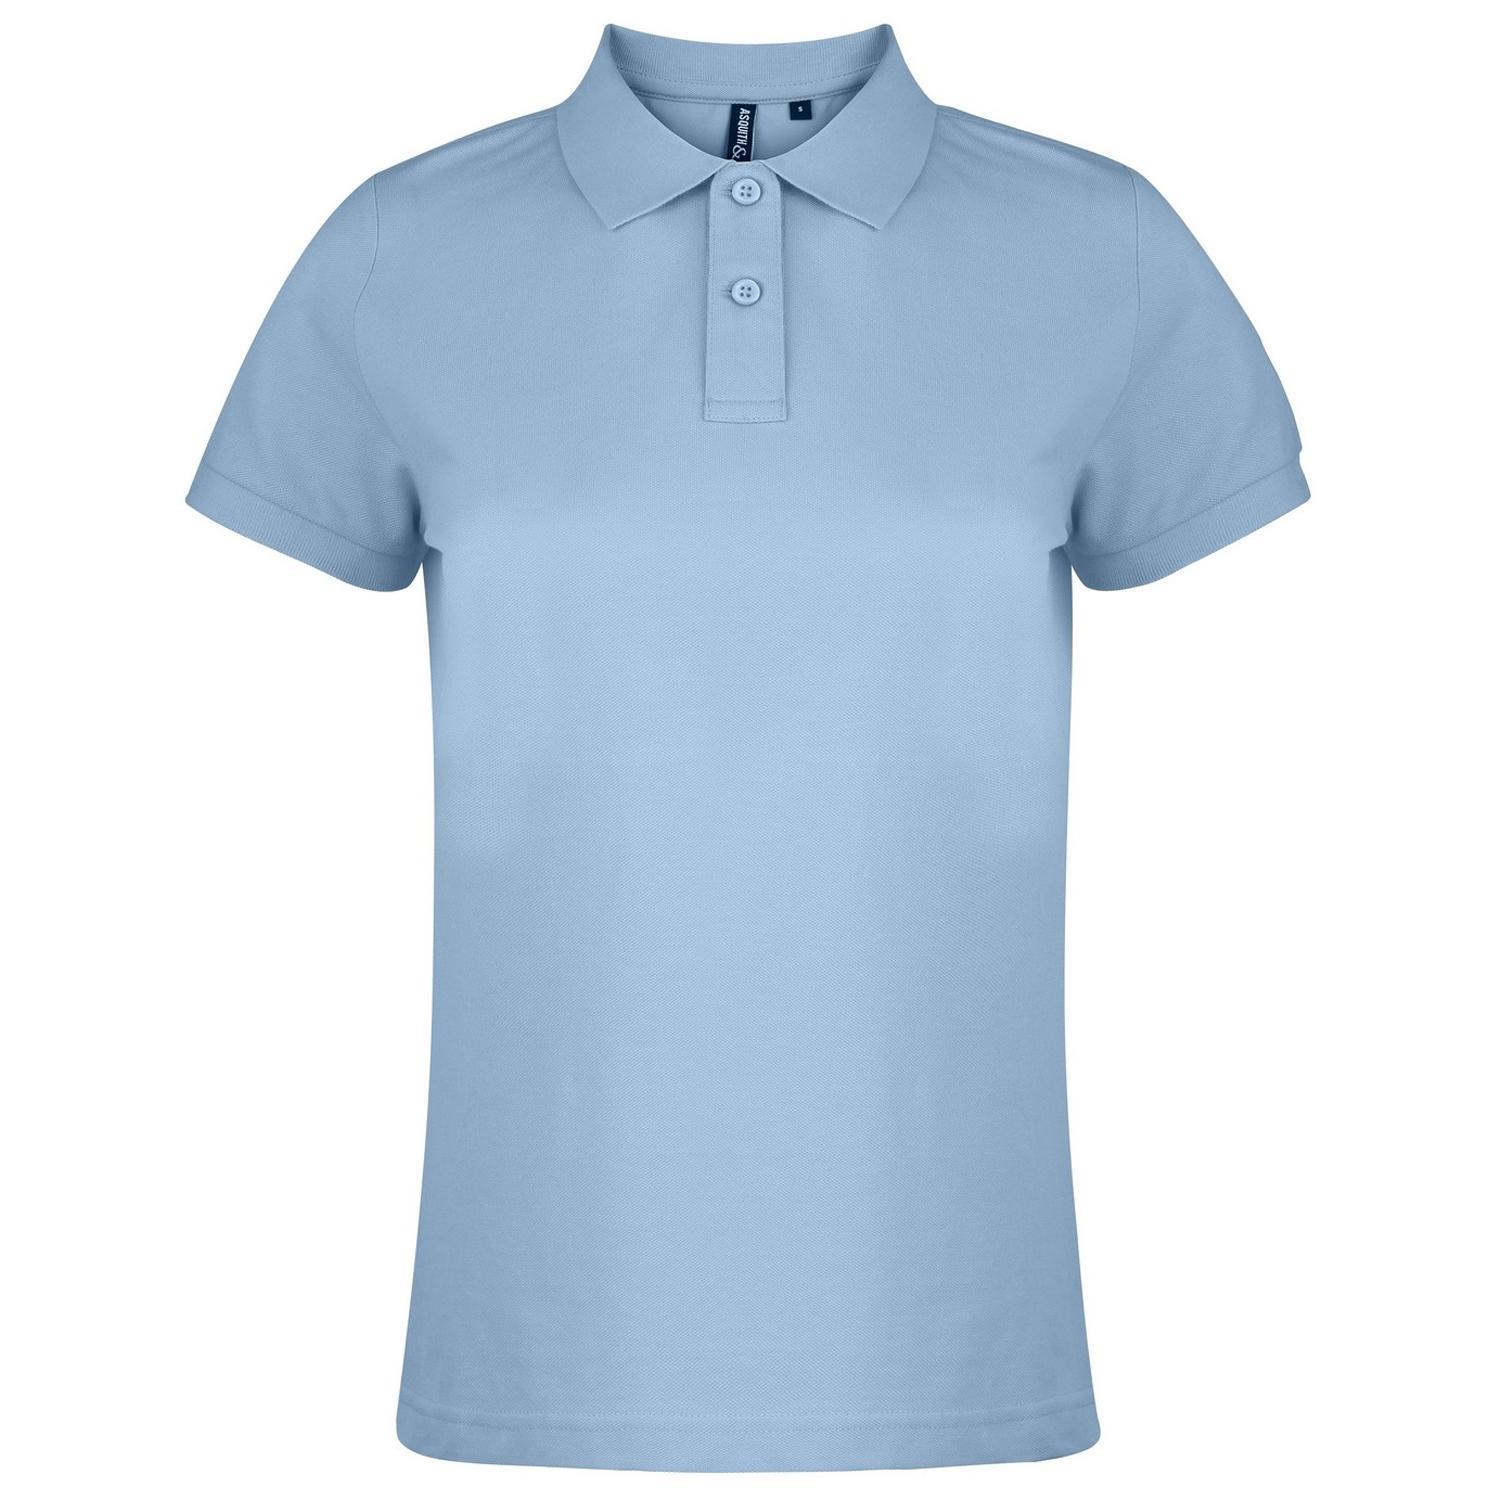 Asquith & Fox Womens/Ladies Plain Short Sleeve Polo Shirt (Sky) (XS)